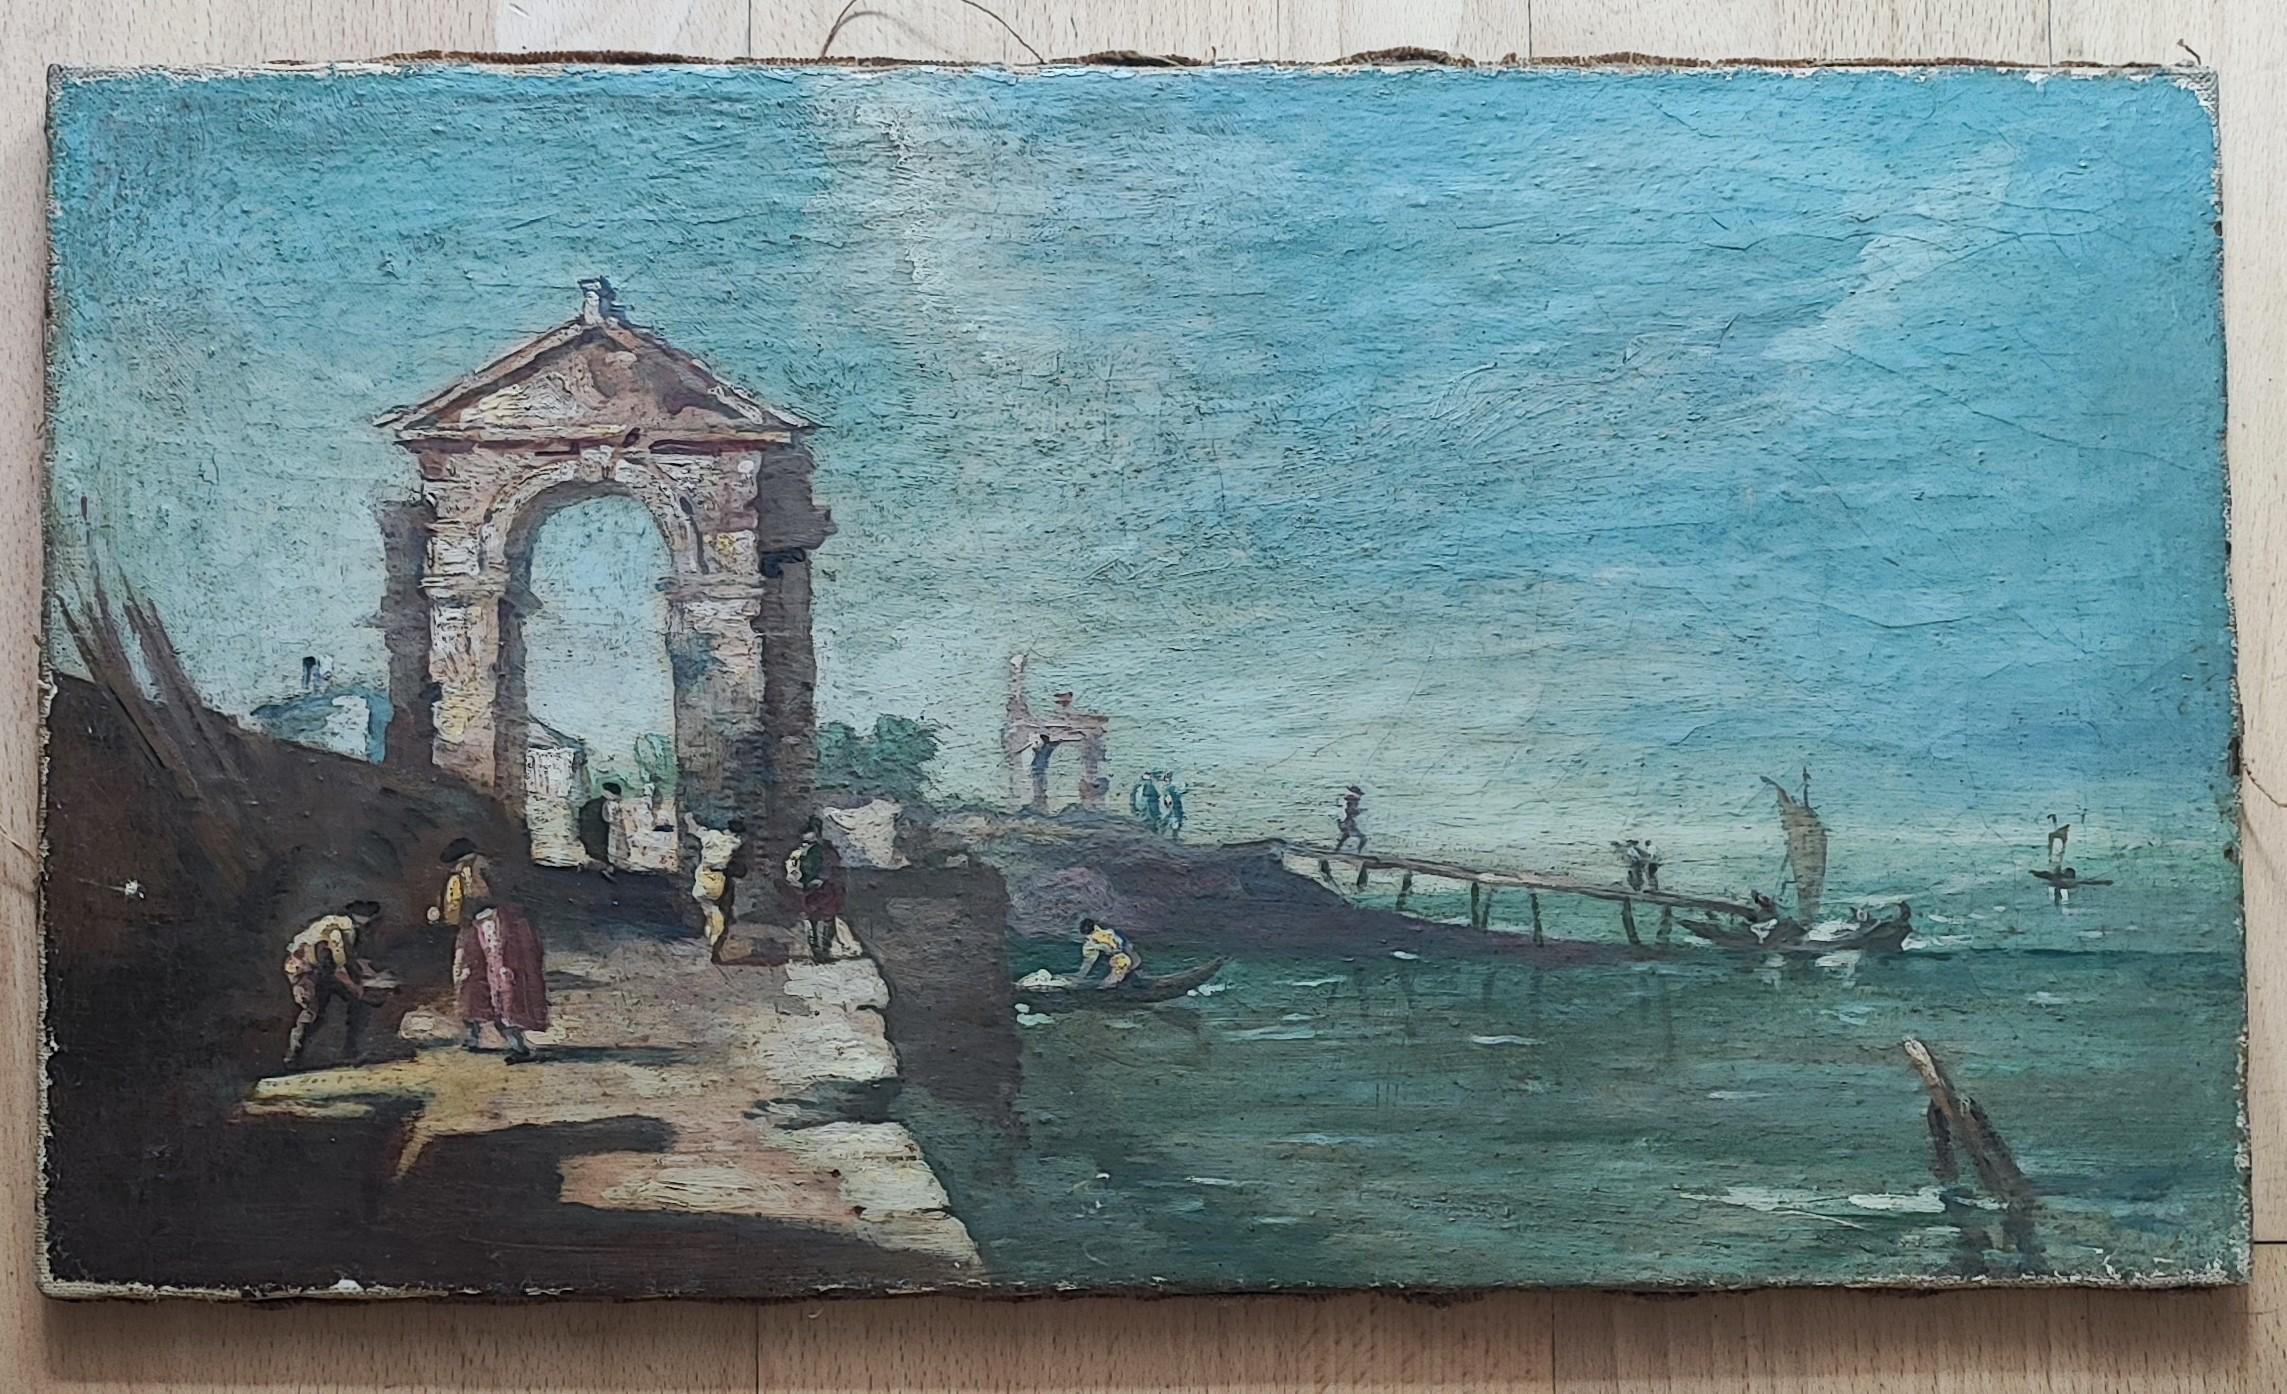 Capriccio by the Lagoon, Venice - Painting by Francesco Guardi